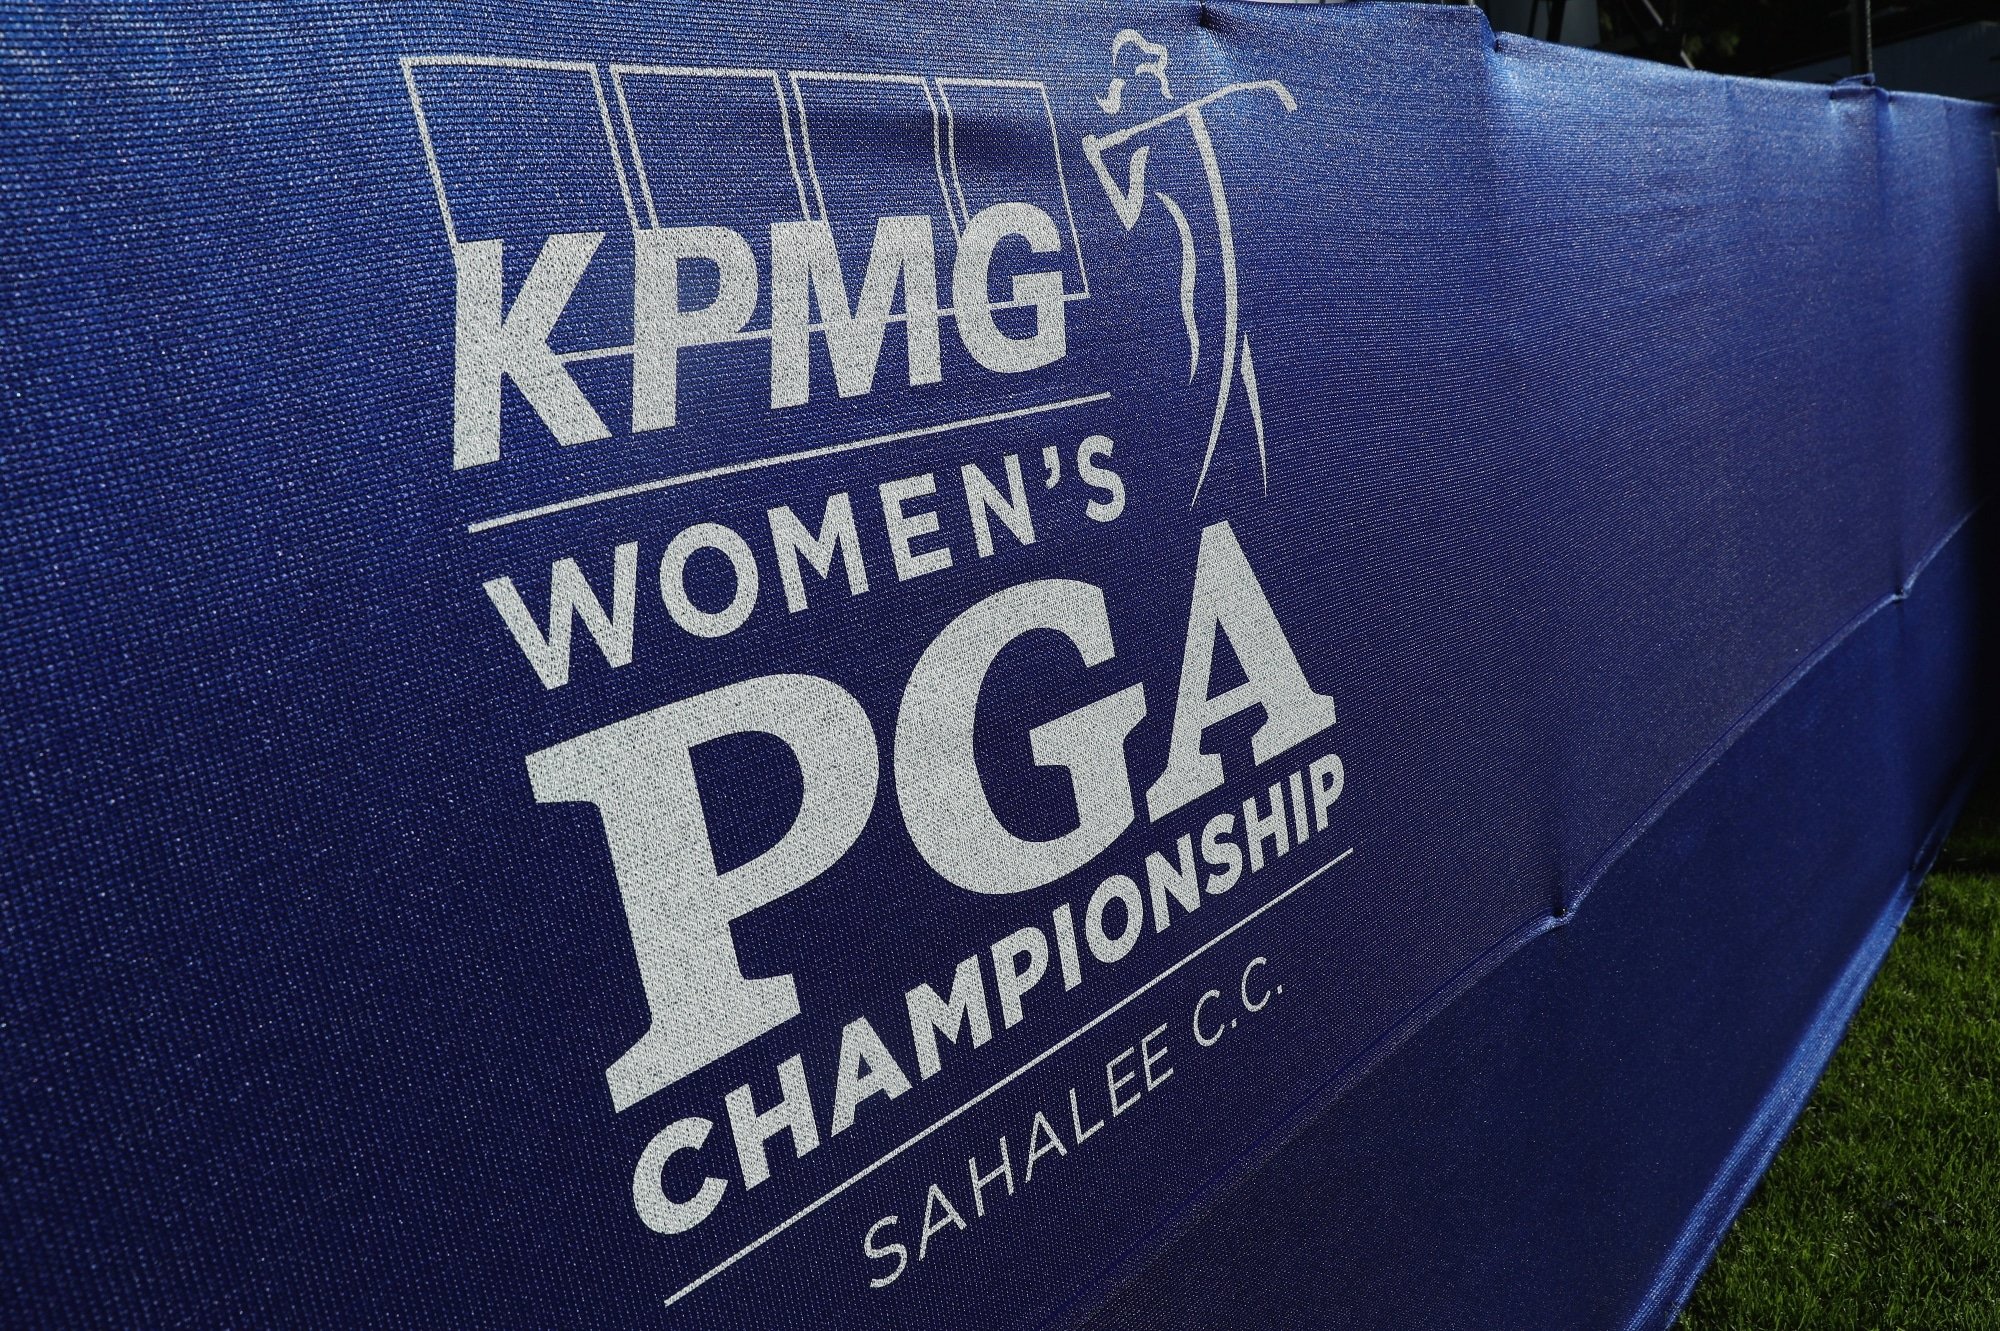 Women's PGA Championship history